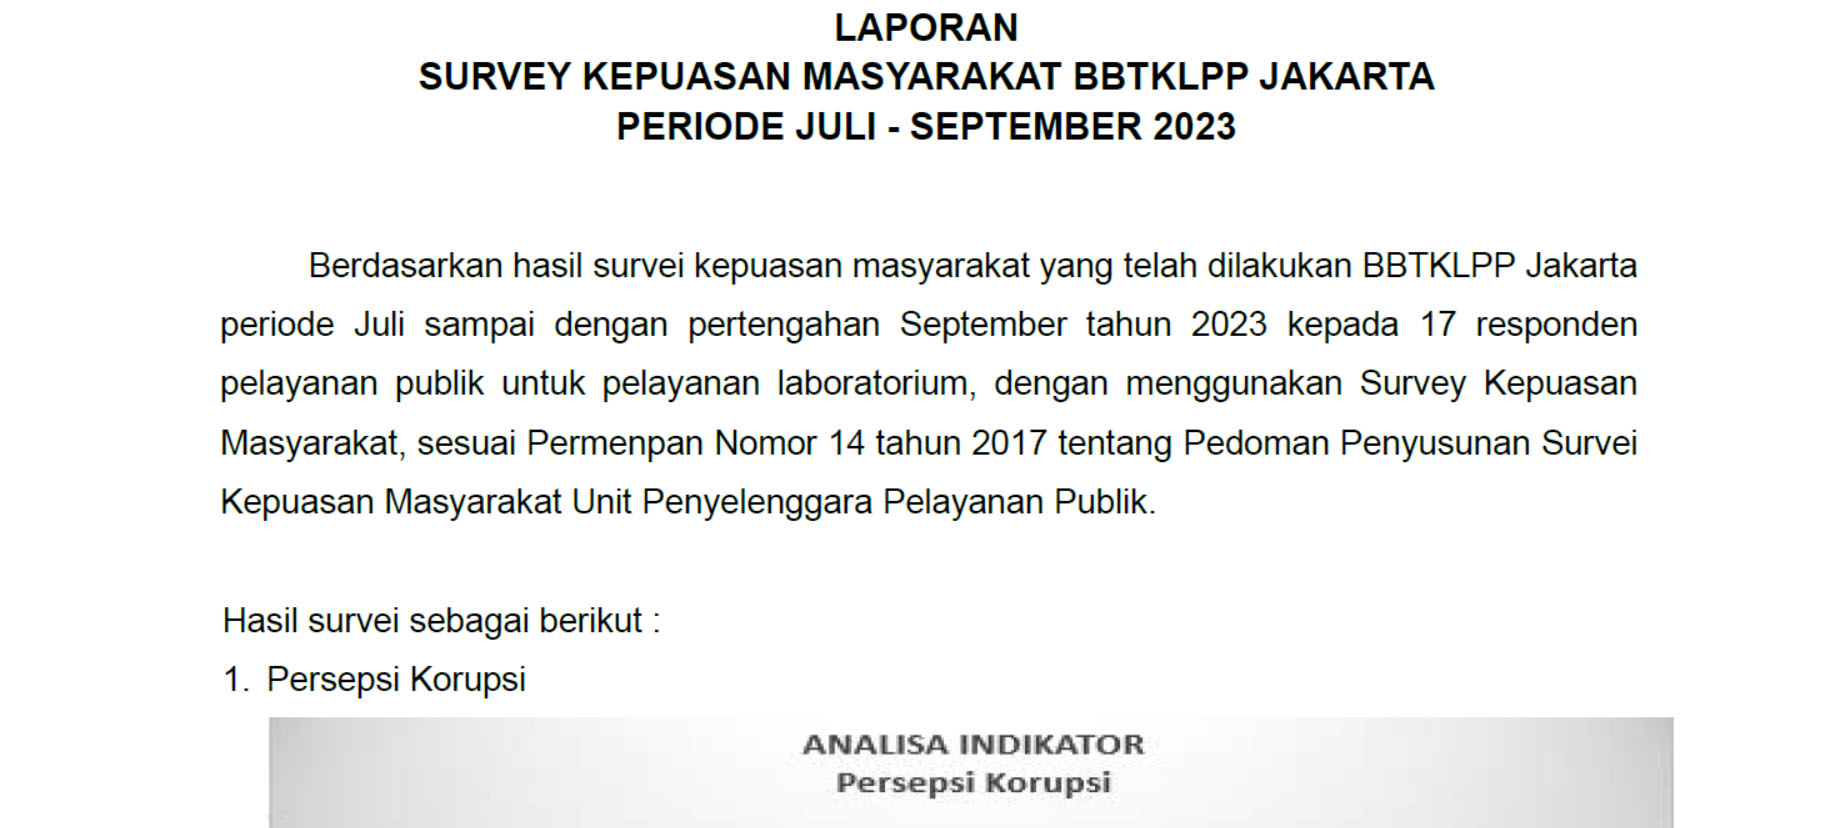 LAPORAN TW3 SURVEY KEPUASAN MASYARAKAT BBTKLPP JAKARTA 2023